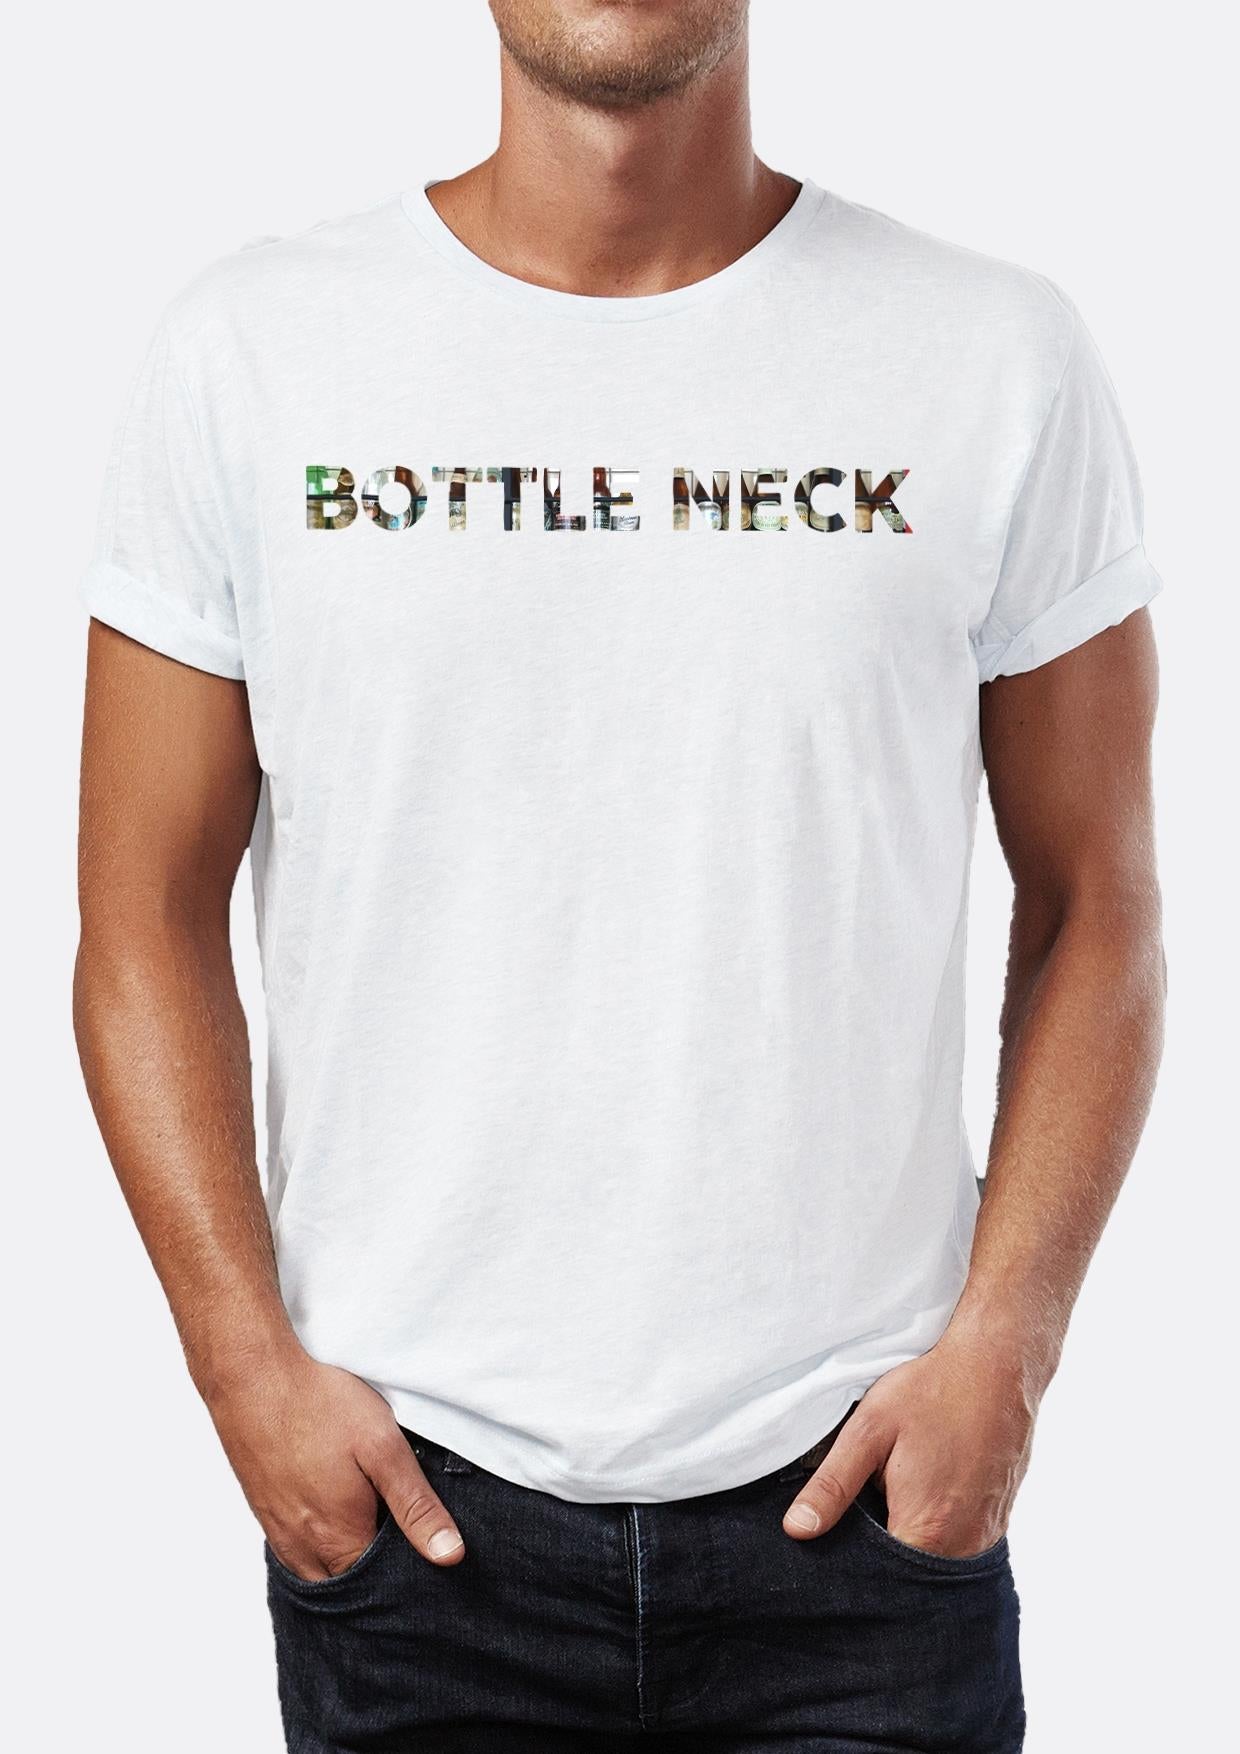 Bottle neck typography printed Crew Neck men's t -shirt